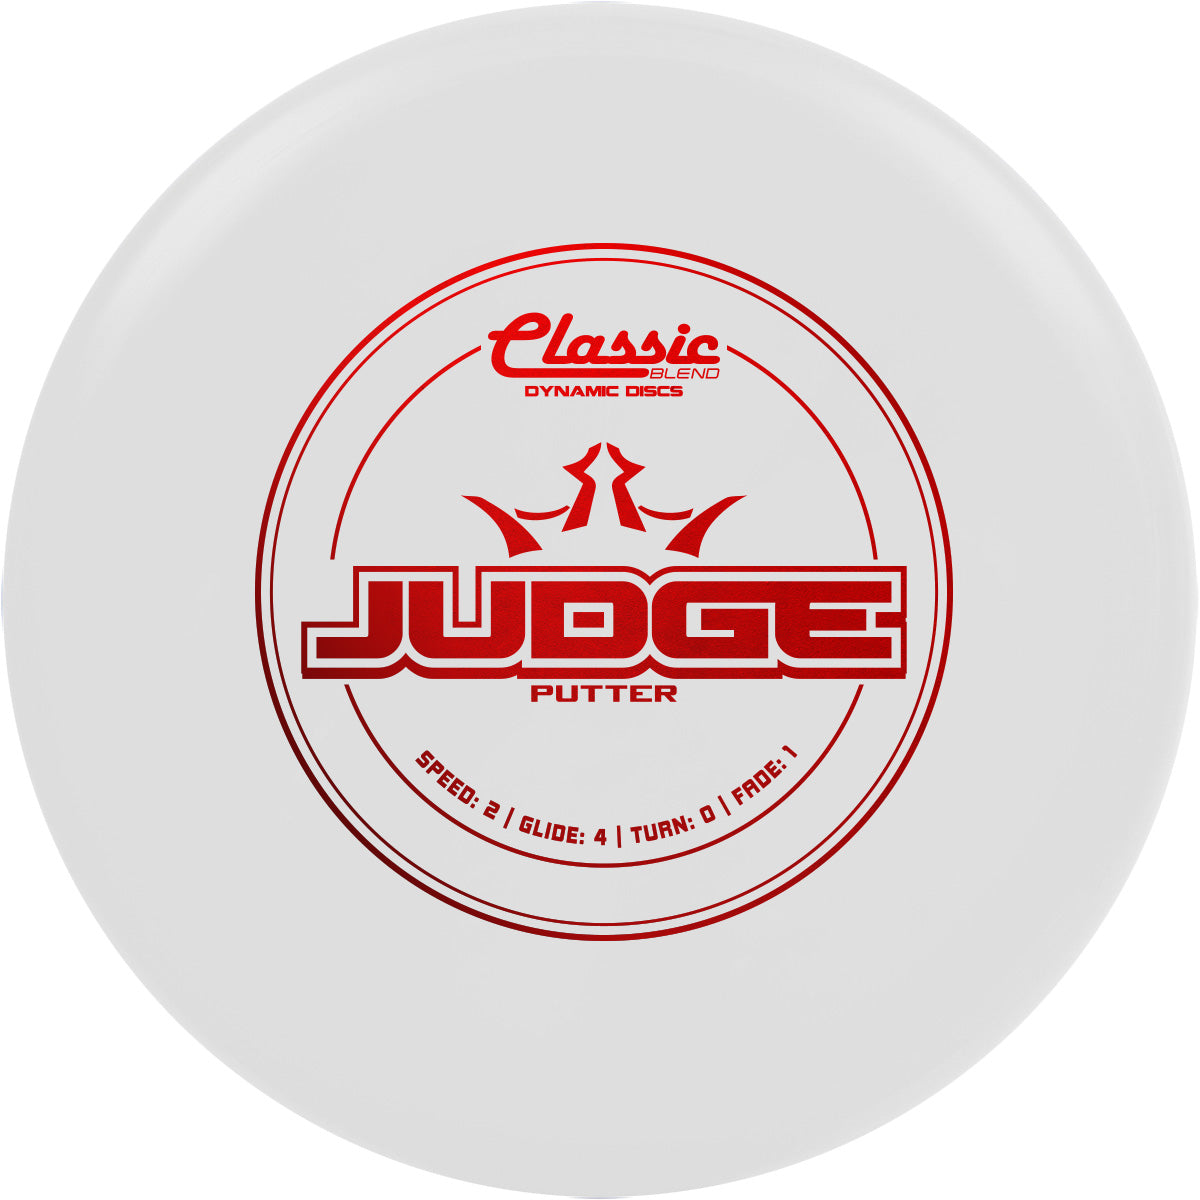 Classic Blend Judge (6544685367361)